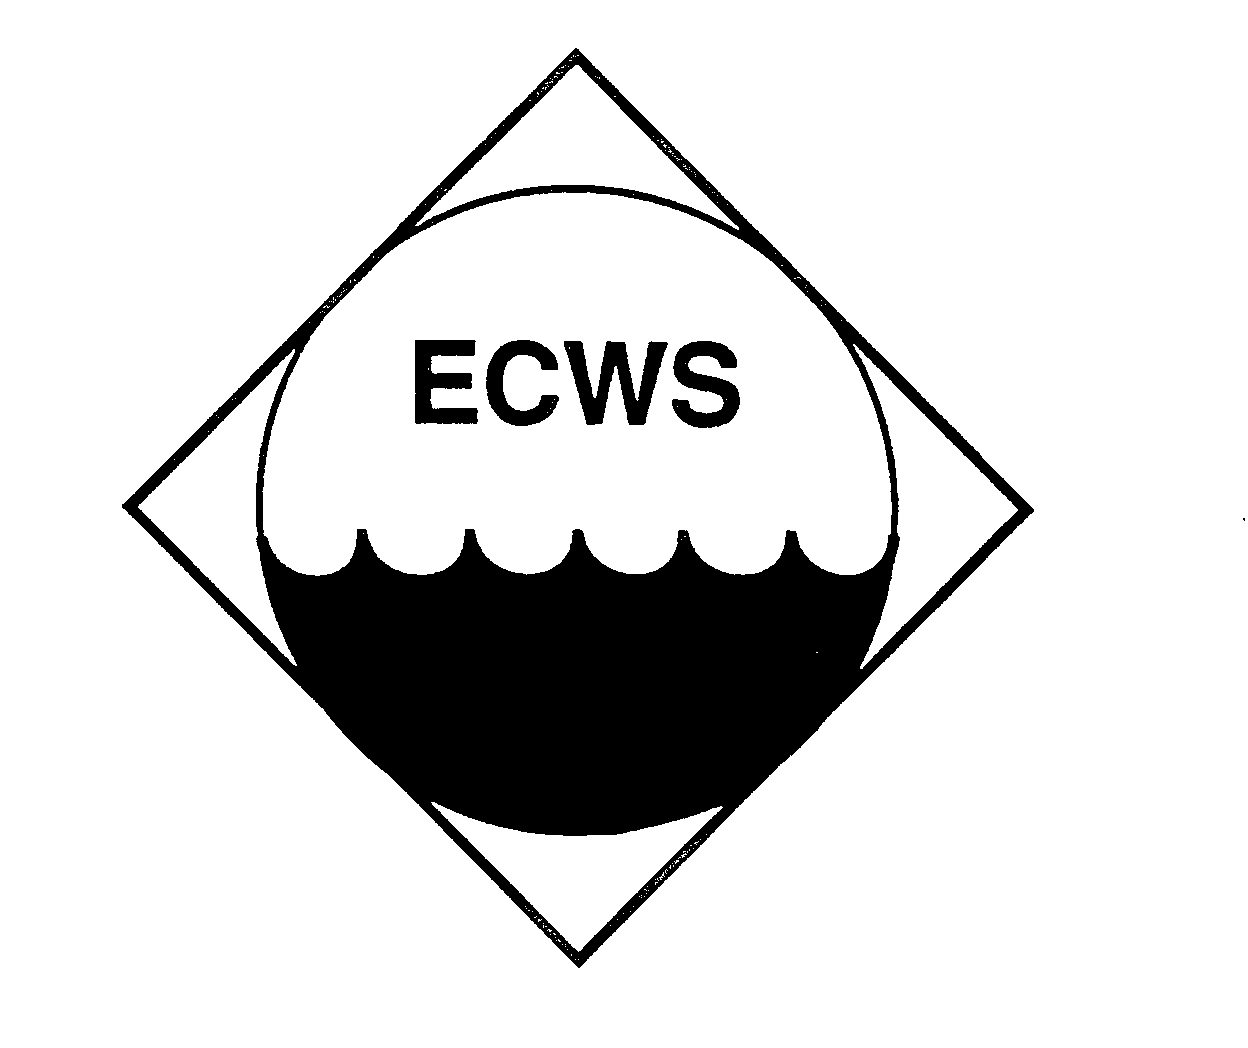  ECWS